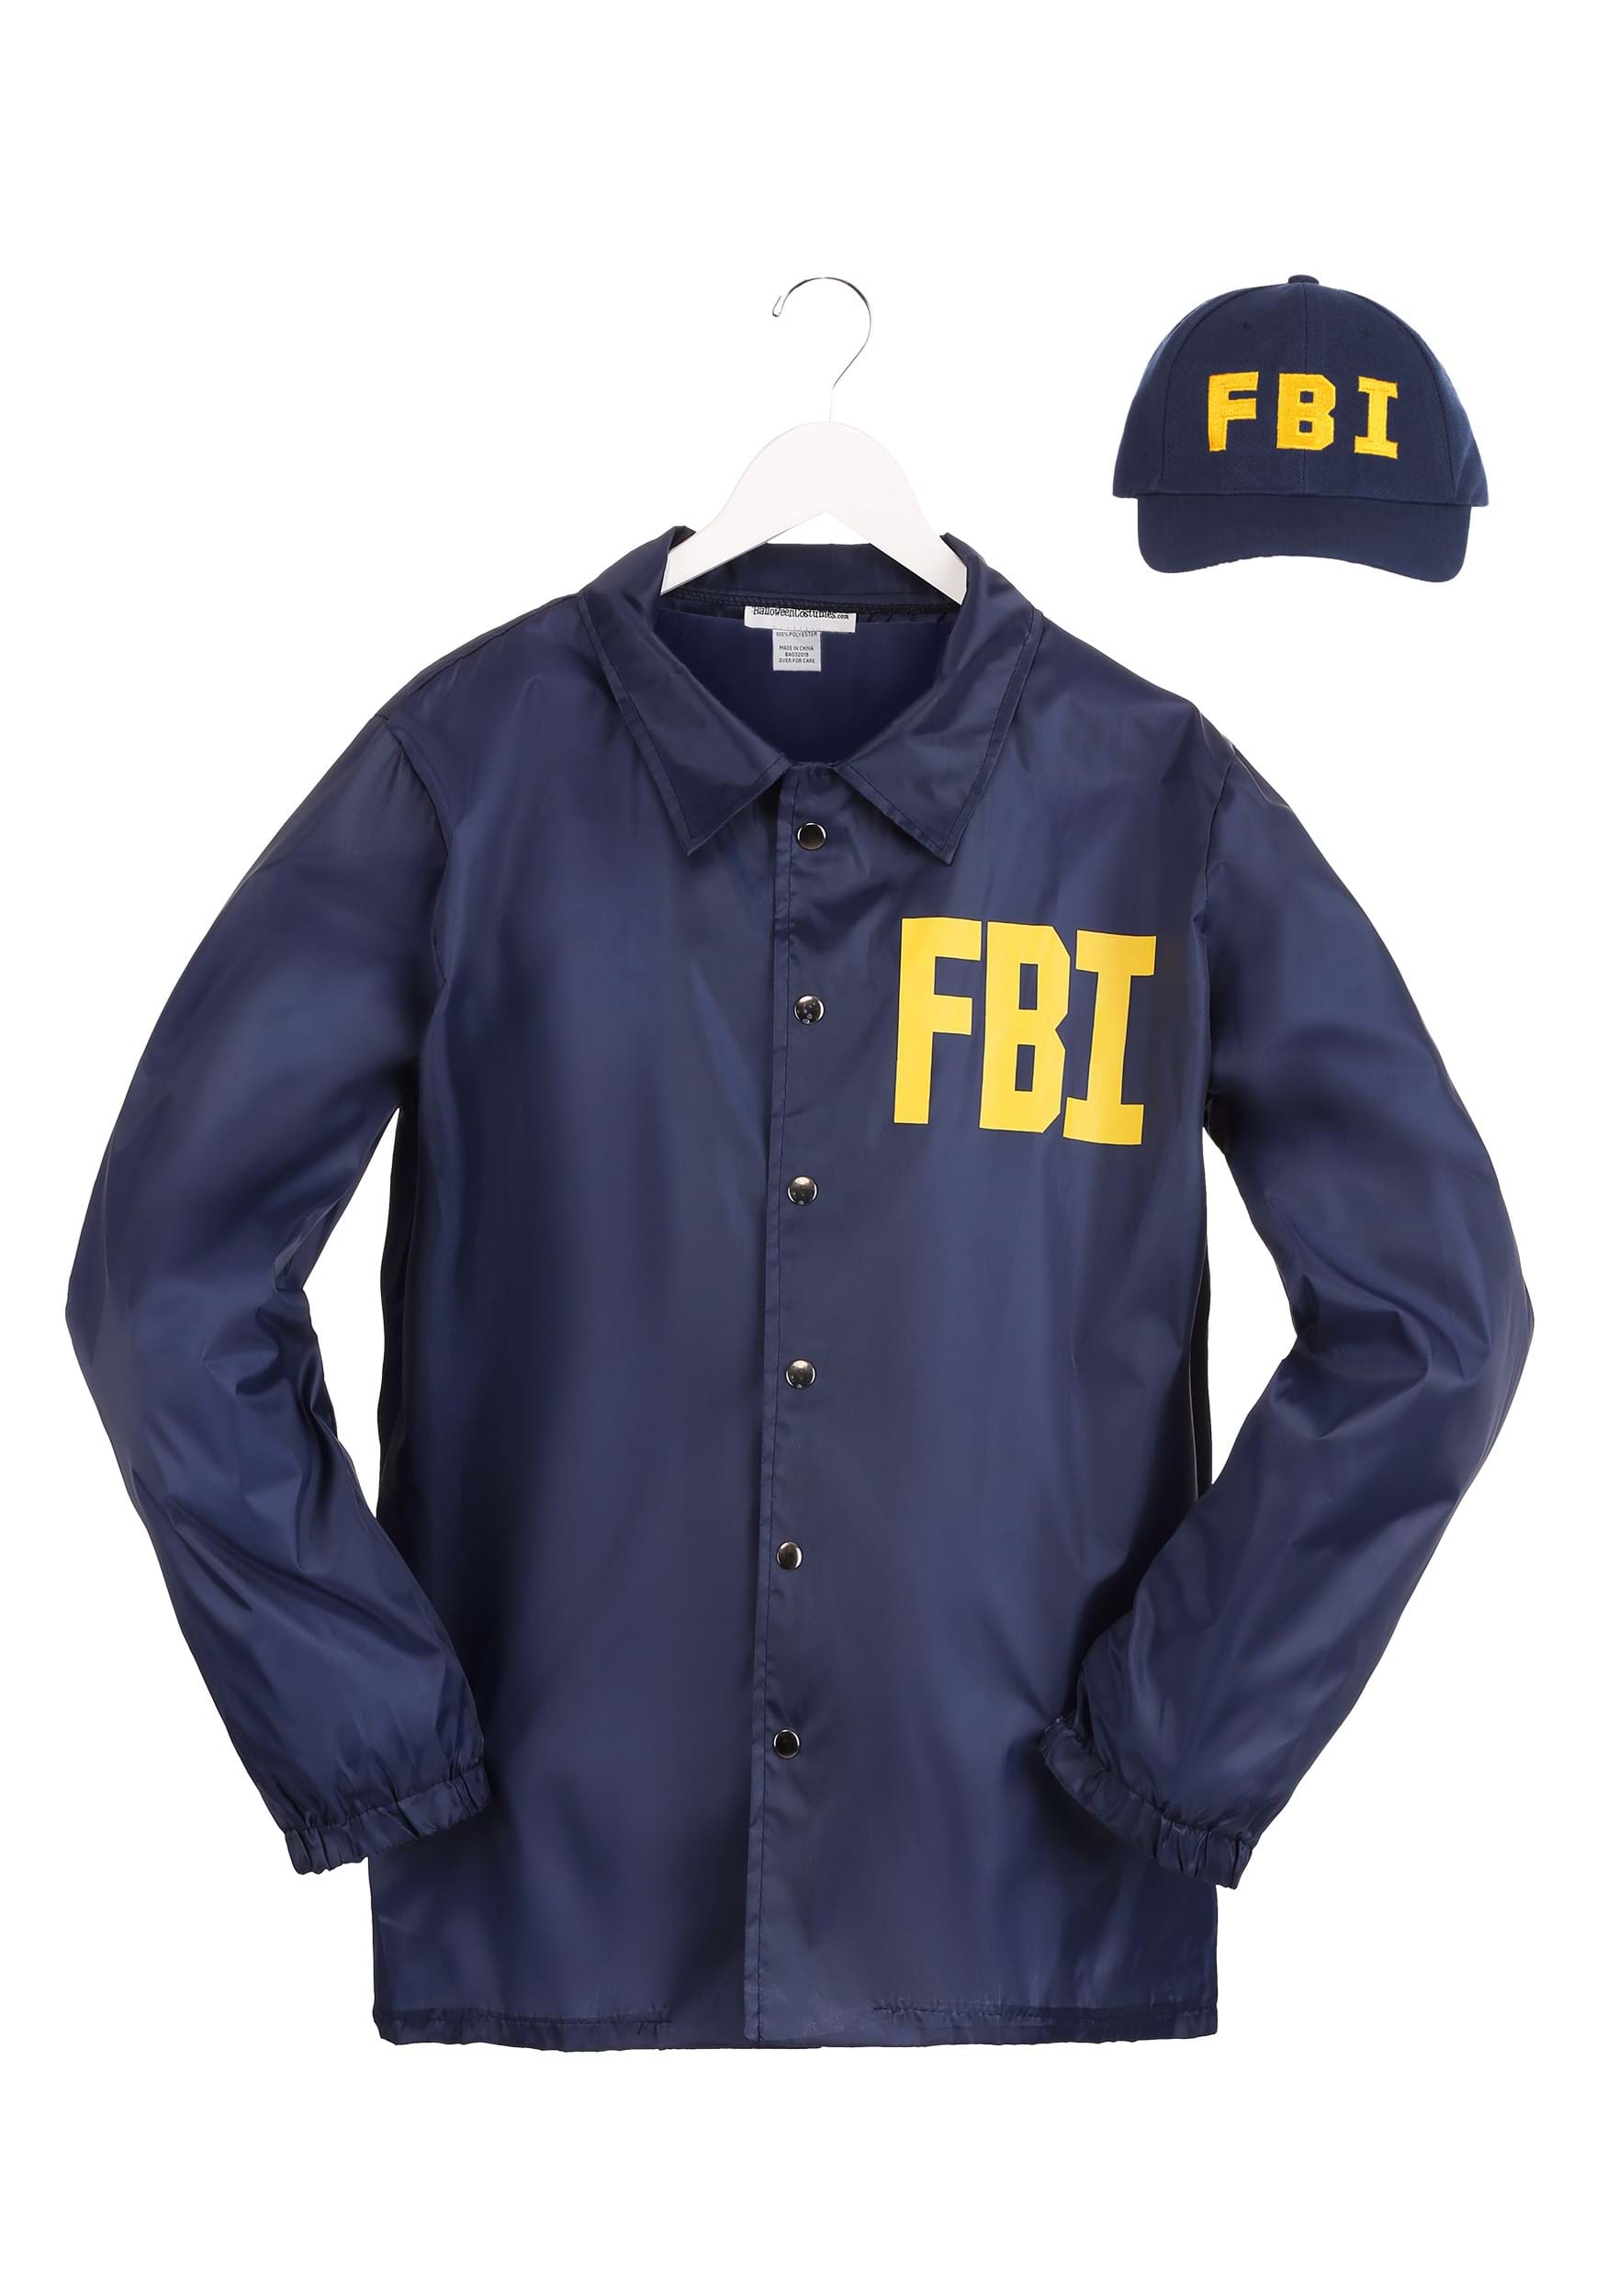 Plus Size FBI Adult Fancy Dress Costume Jacket